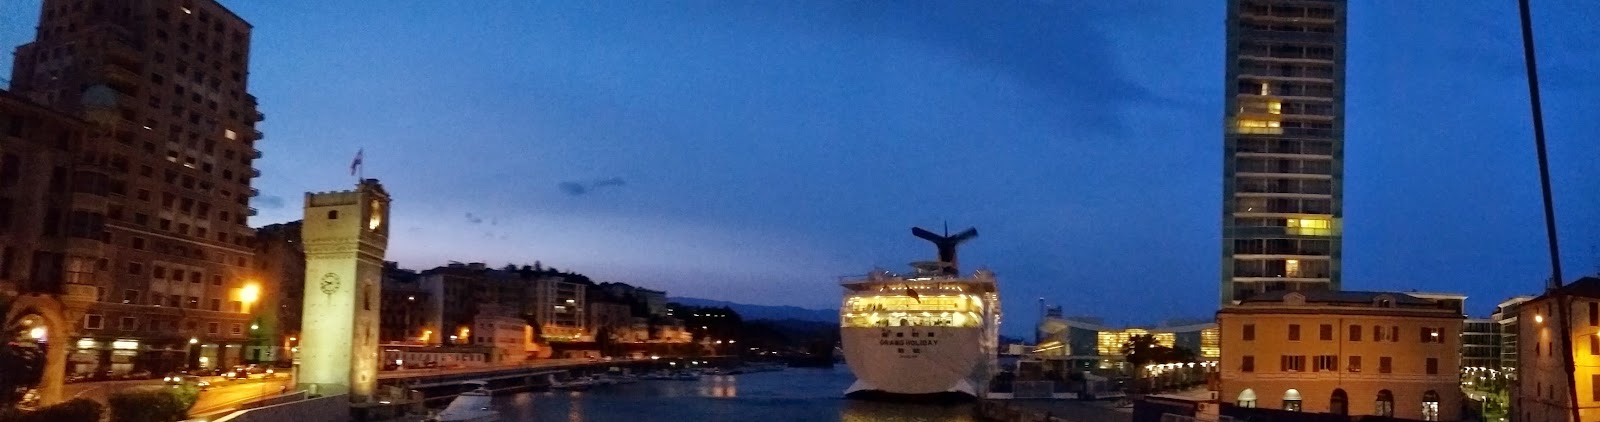 Savona Italy Harbour at night time